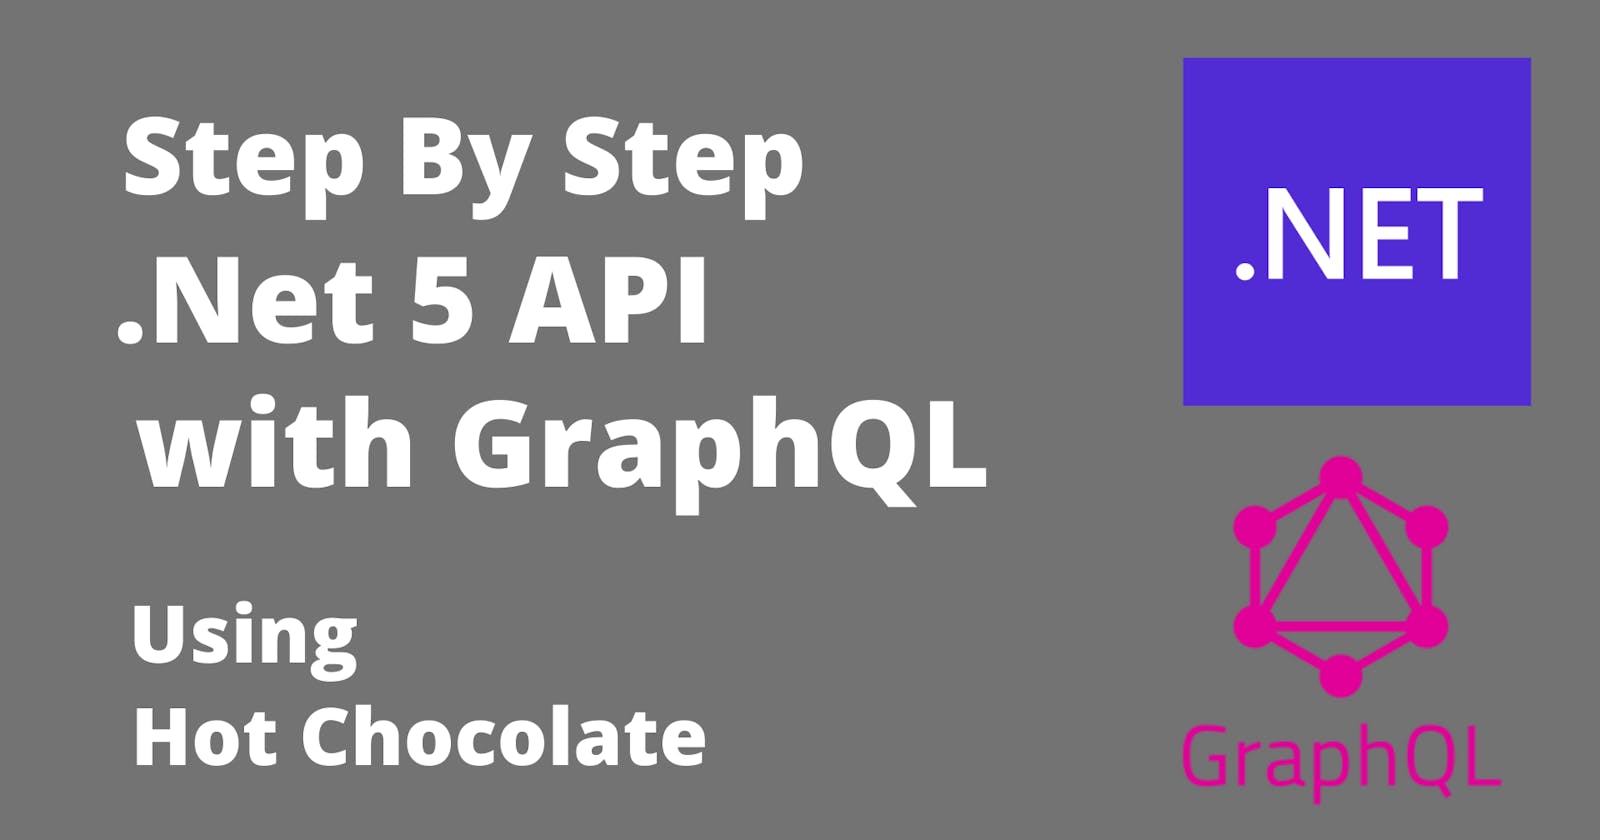 .Net 5 API with GraphQL - Step by Step